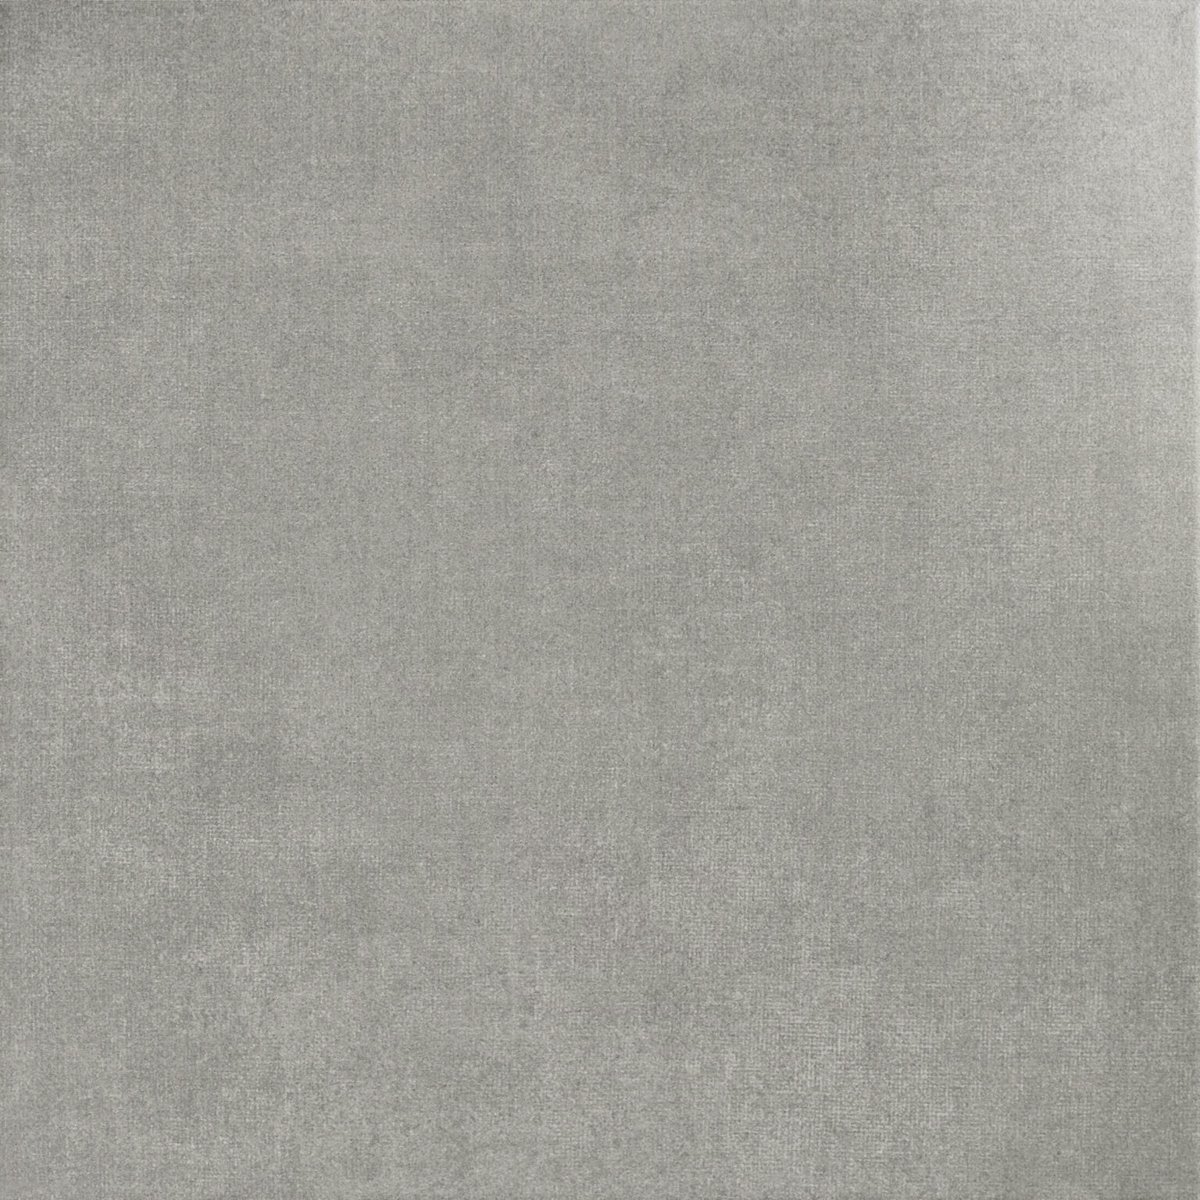 NATURE - Carrelage Sol Effet tissu - Grey  45x45 - Réf.194107